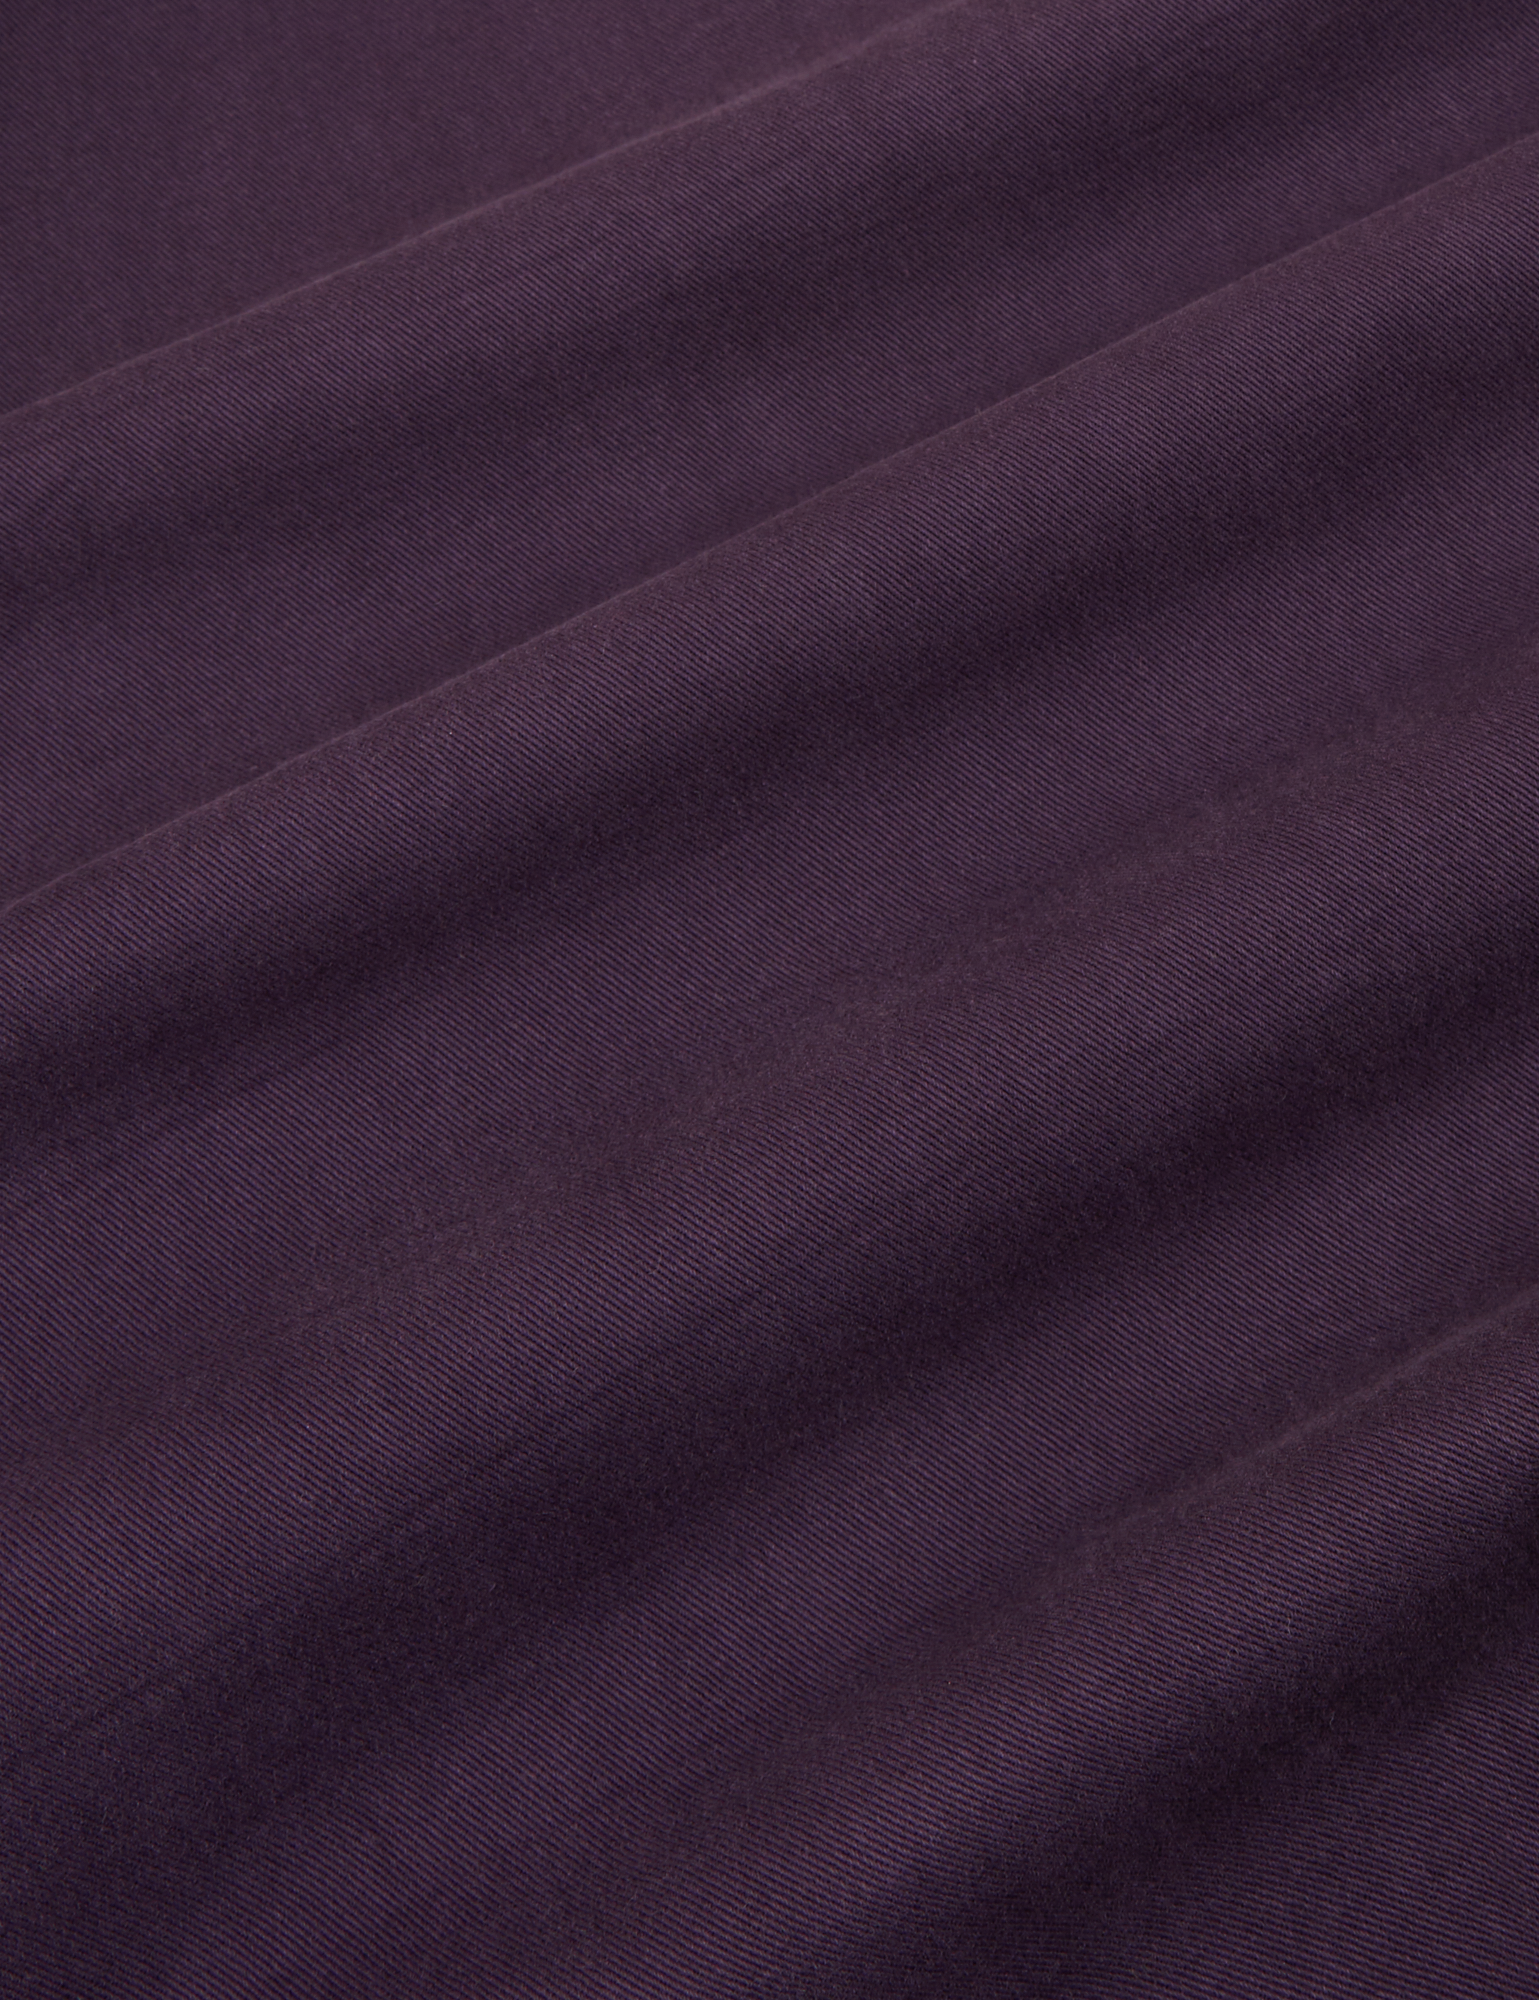 Ricky Jacket in Nebula Purple fabric detail close up